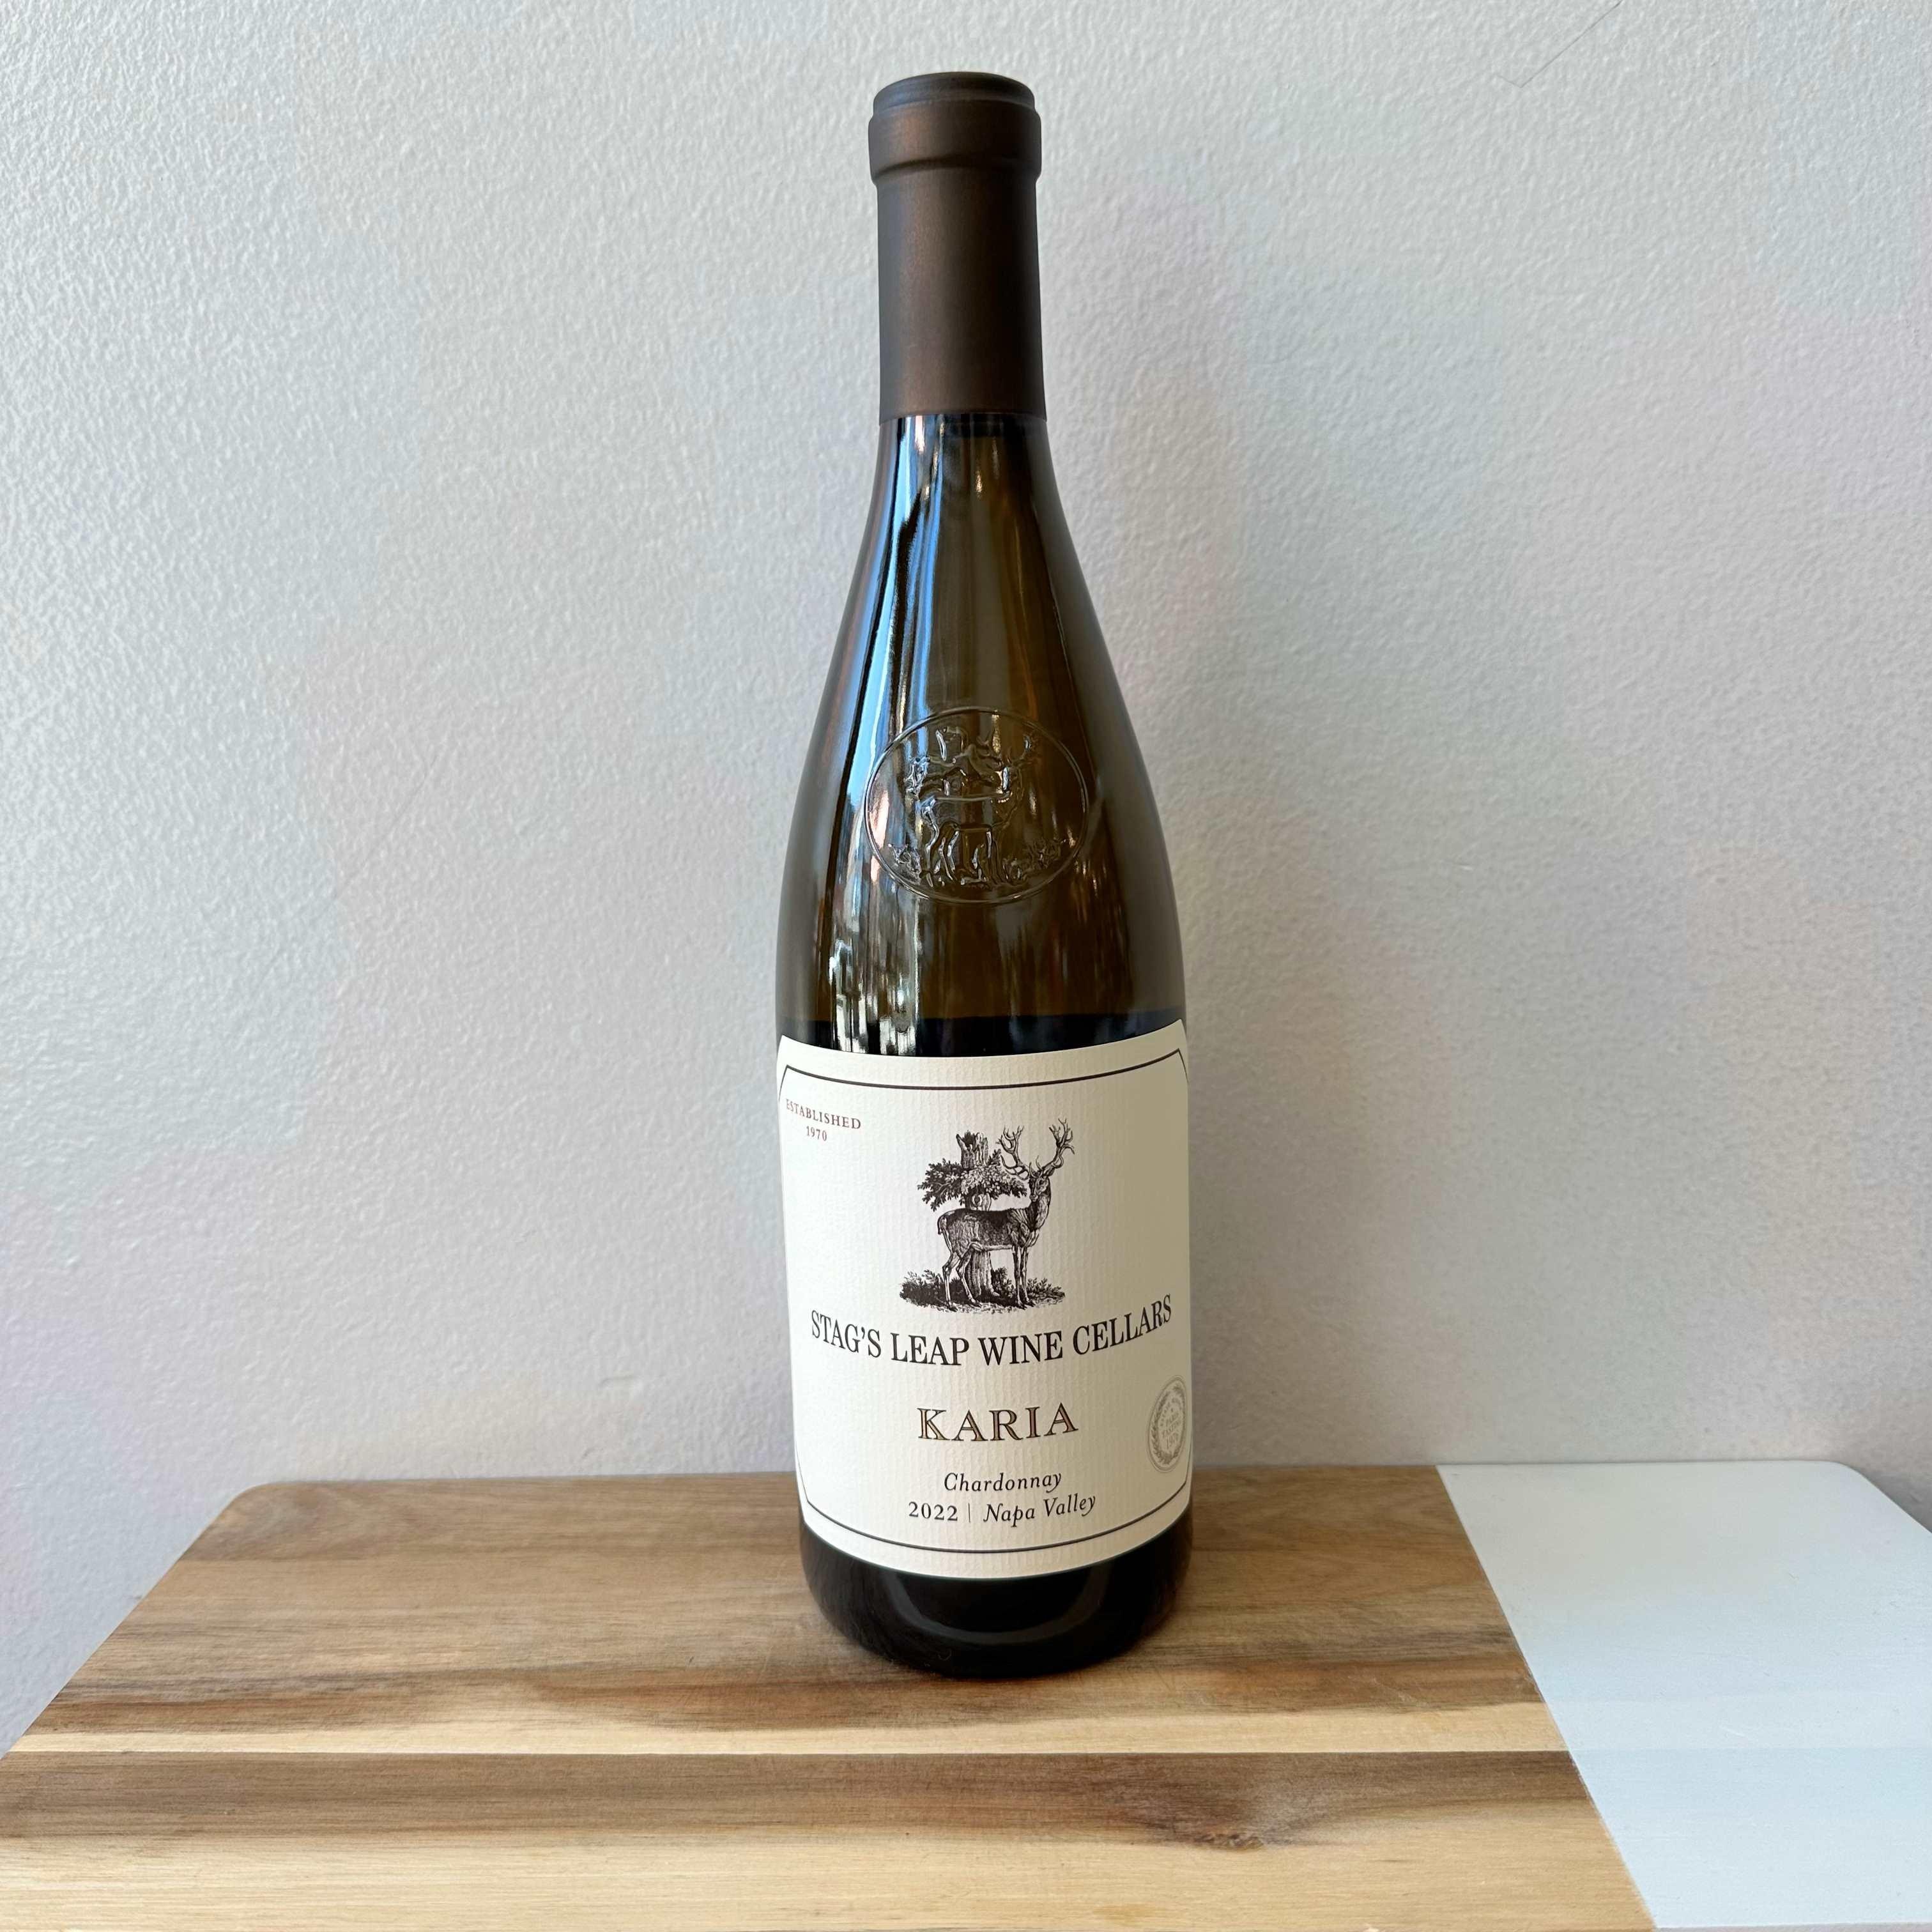 Stag's Leap WIne Cellars "Karia" Chardonnay 2022 Napa Valley